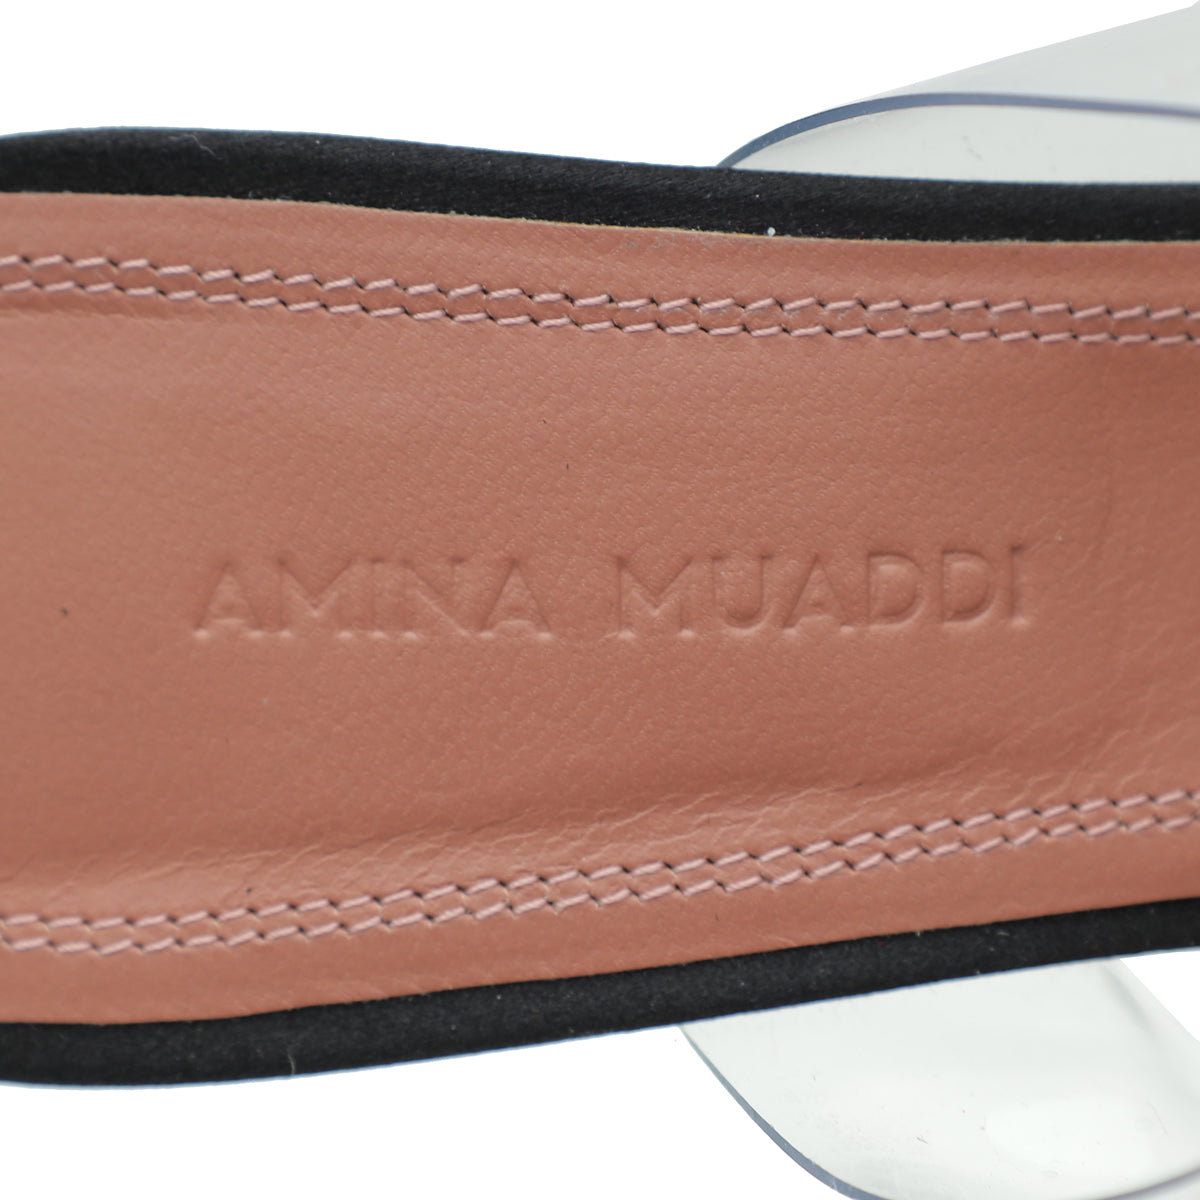 Amina Muaddi Black Zula Crystal Ankle Wrap Sandal 37.5